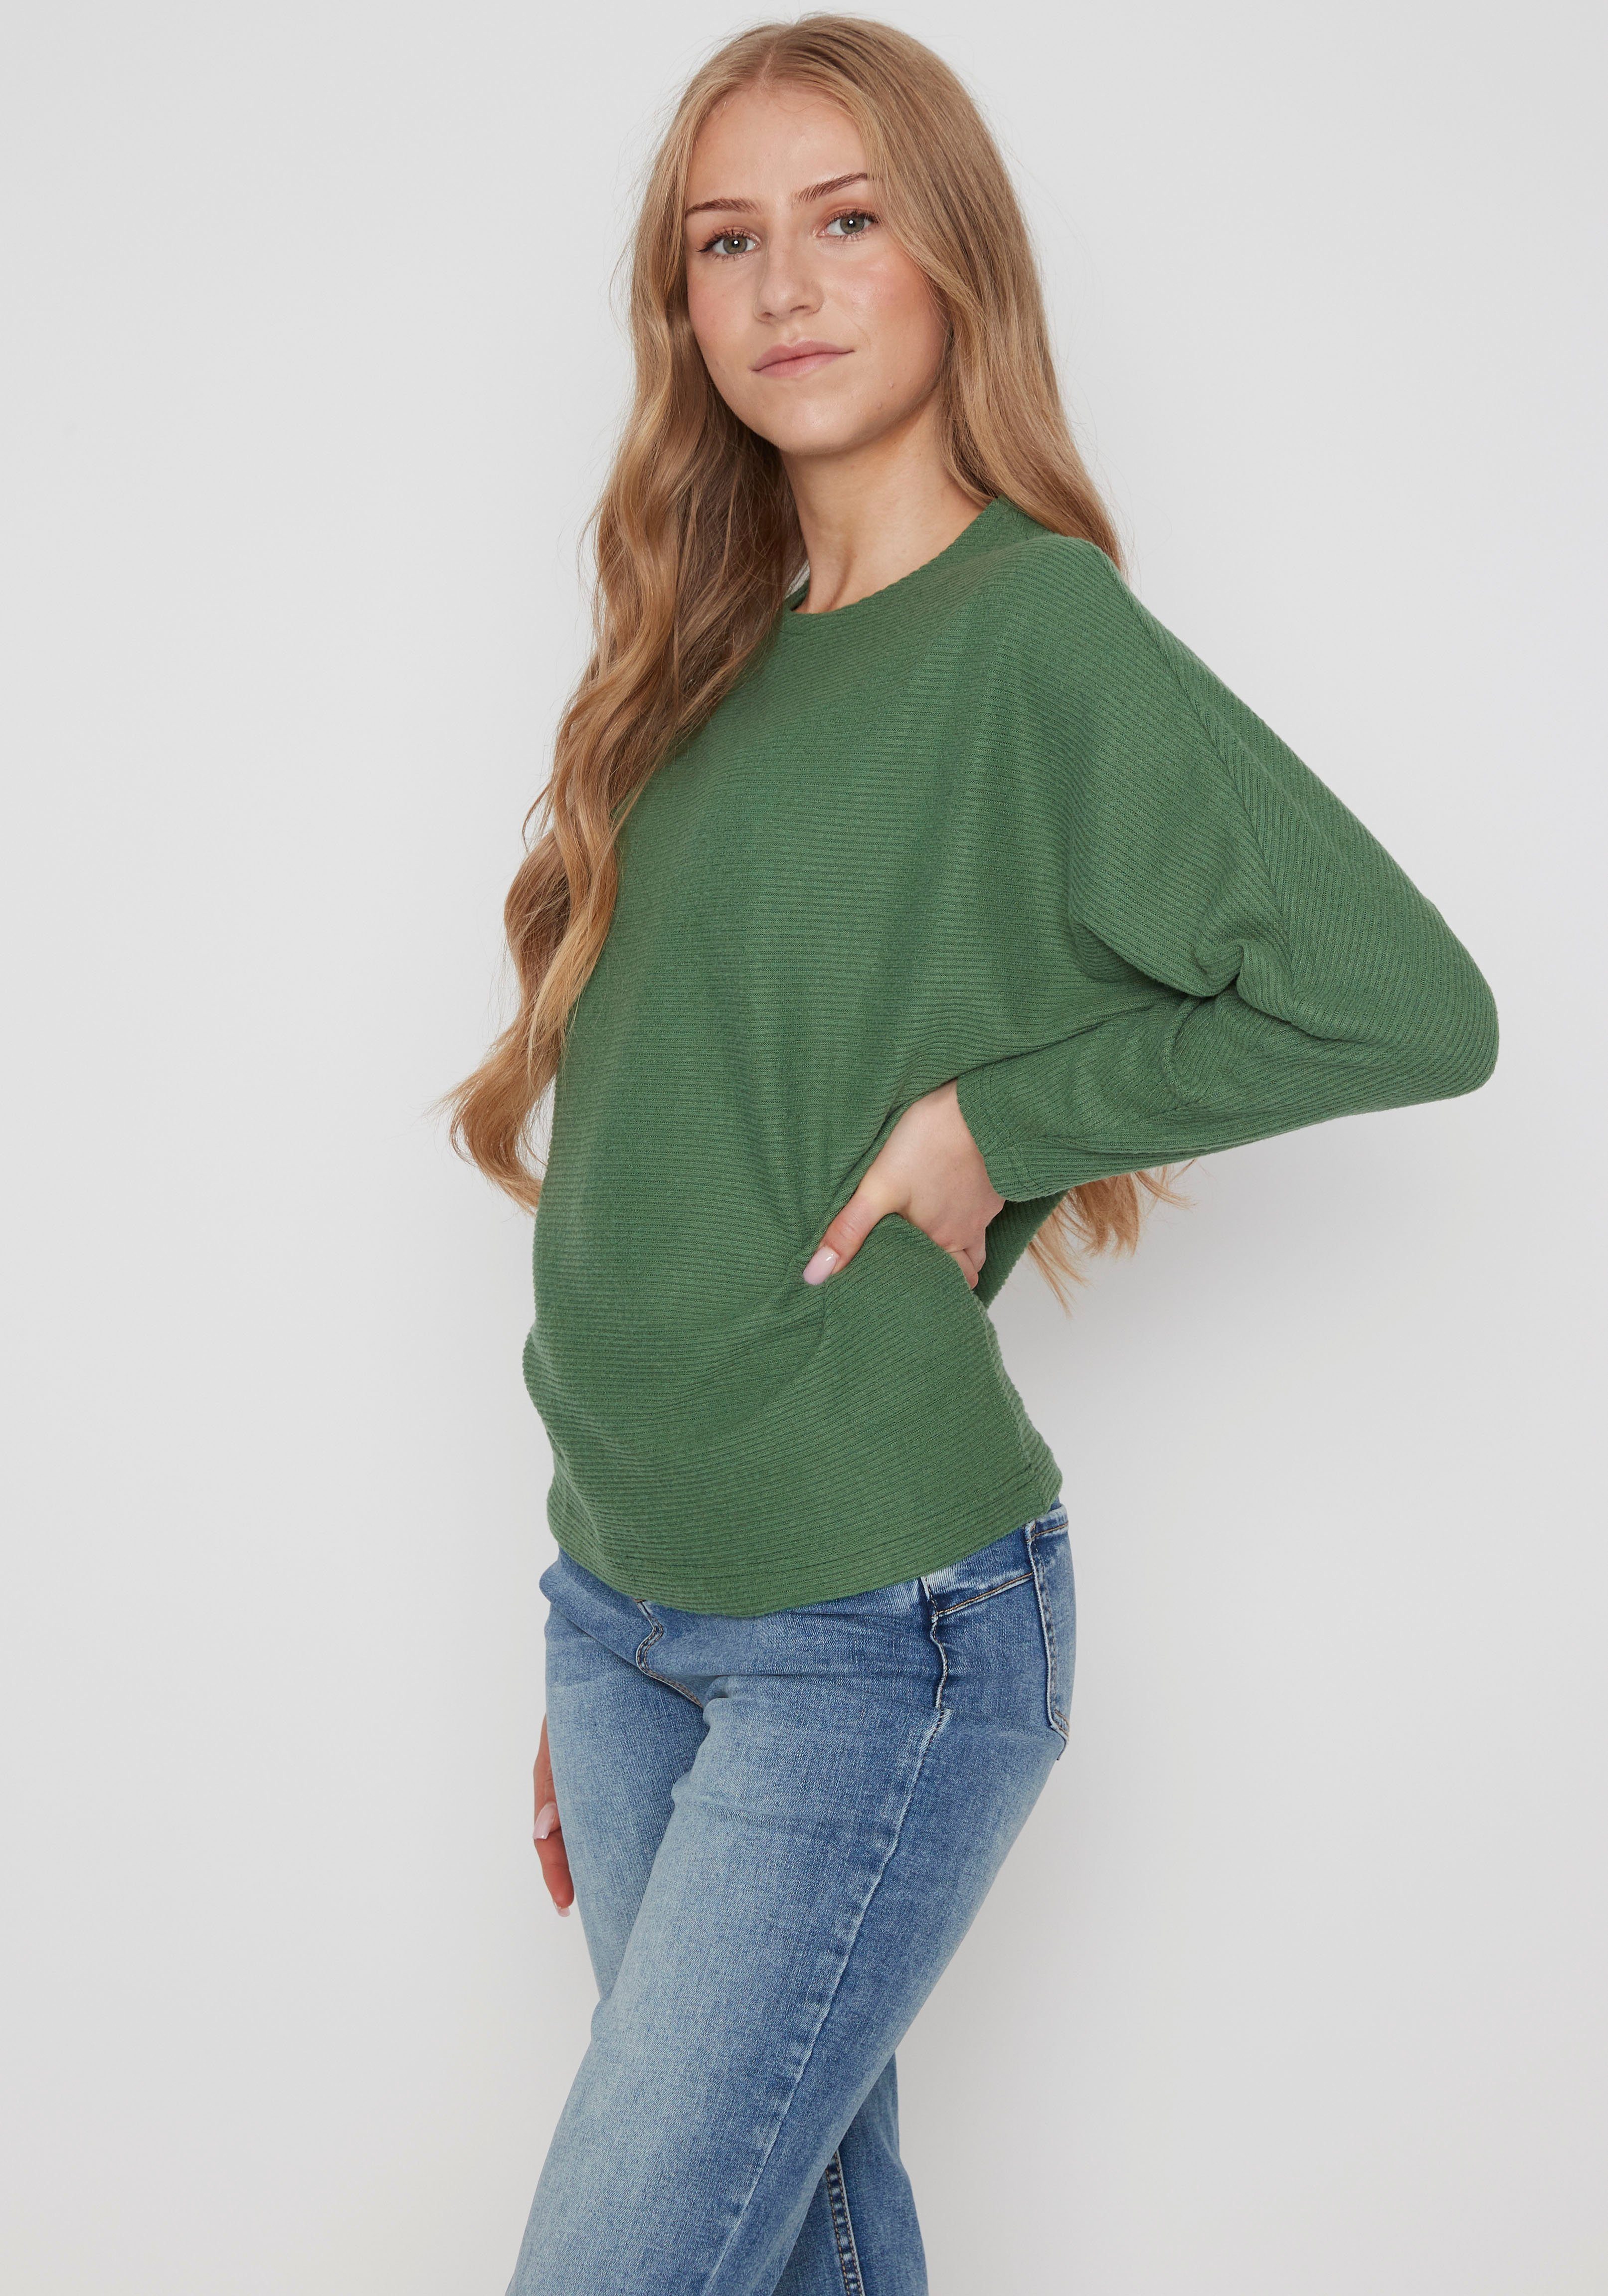 HaILY’S T-Shirt LS P TP marl green fern Ma44ira